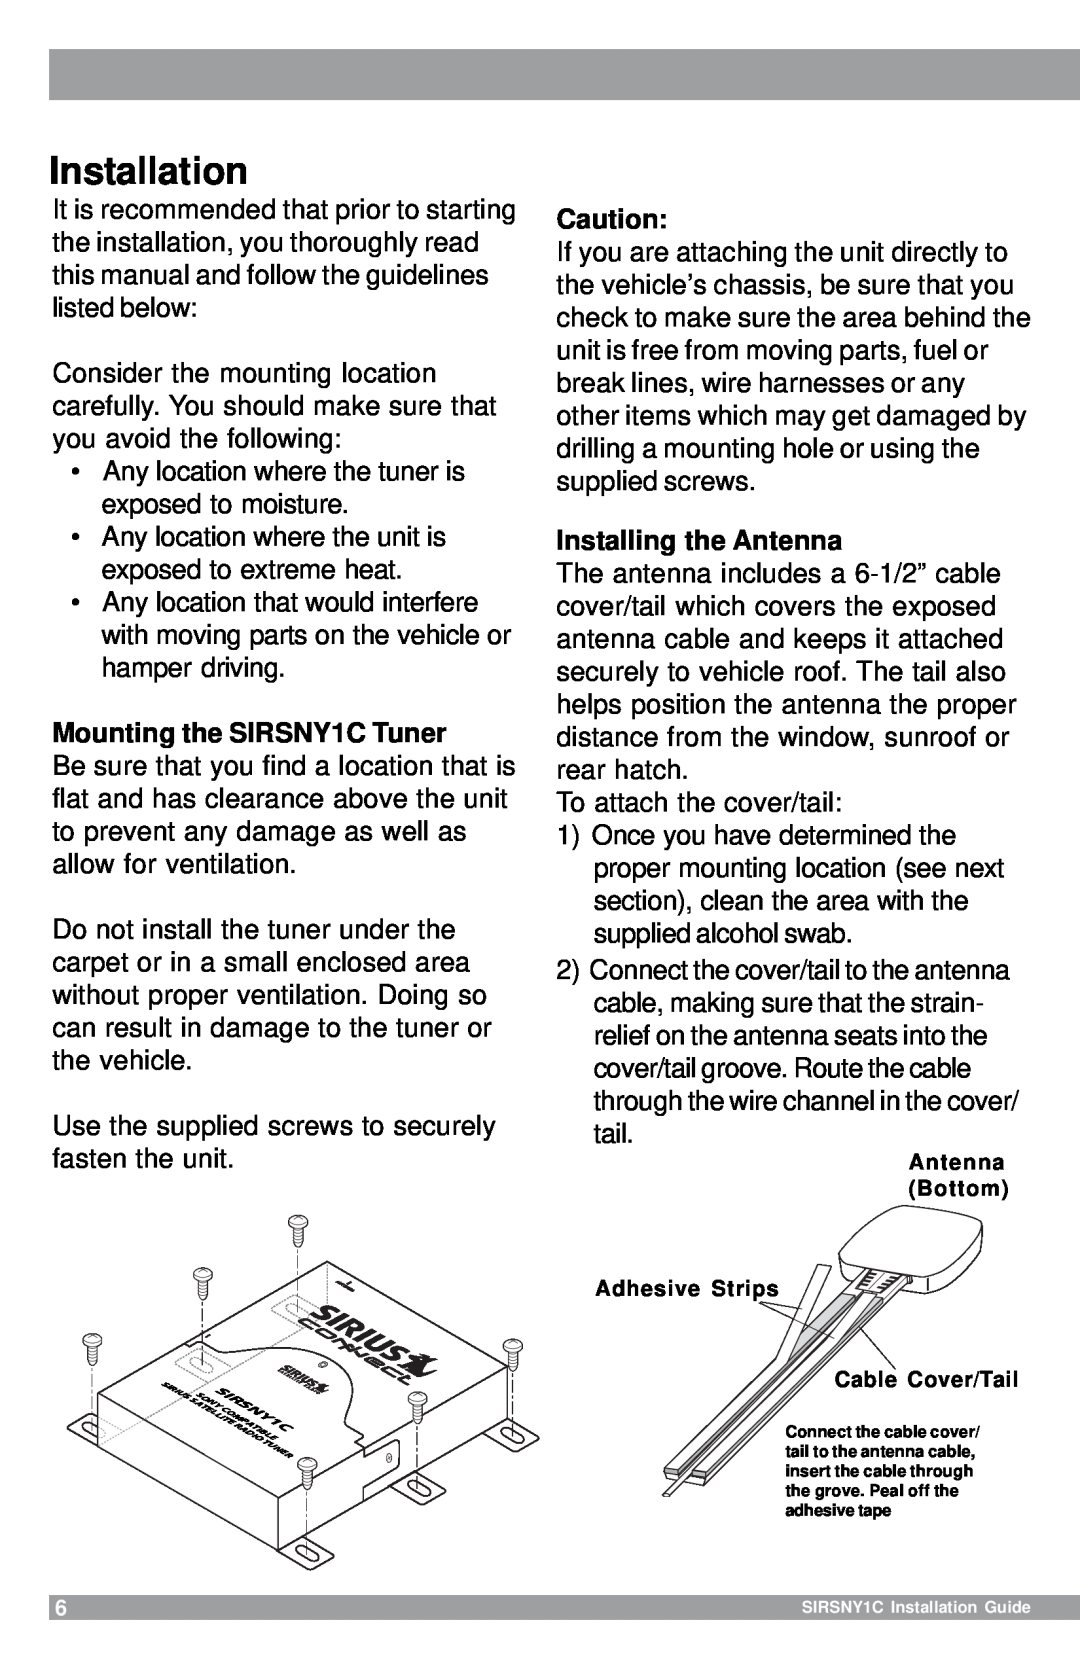 Sirius Satellite Radio manual Installation, Mounting the SIRSNY1C Tuner, Installing the Antenna 